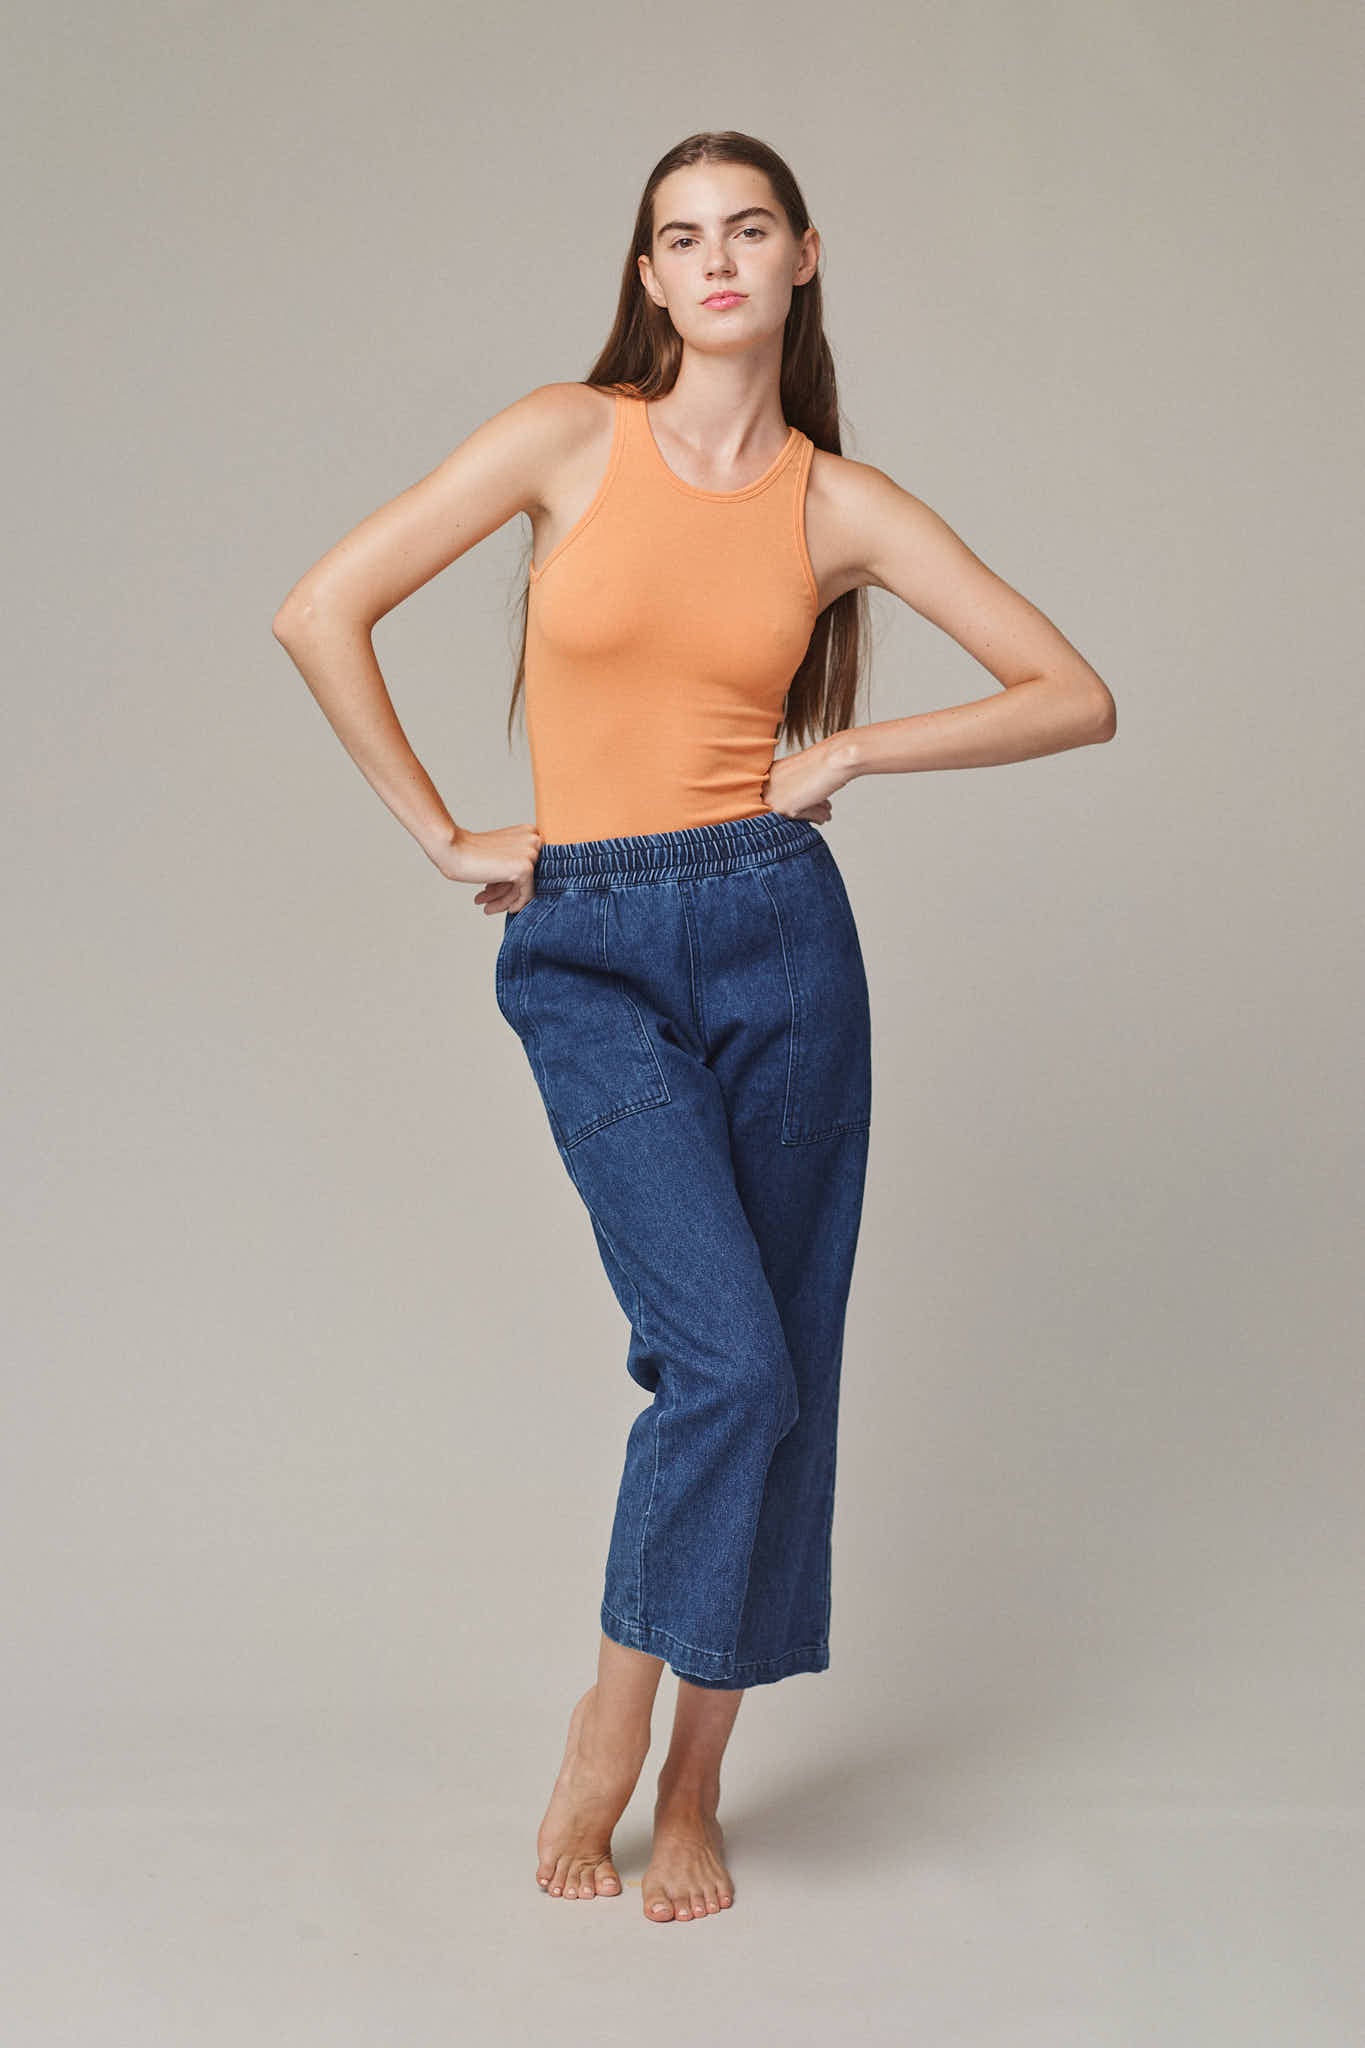 Alta Tank | Jungmaven Hemp Clothing & Accessories / model_desc: Gwen is 5’9” wearing S